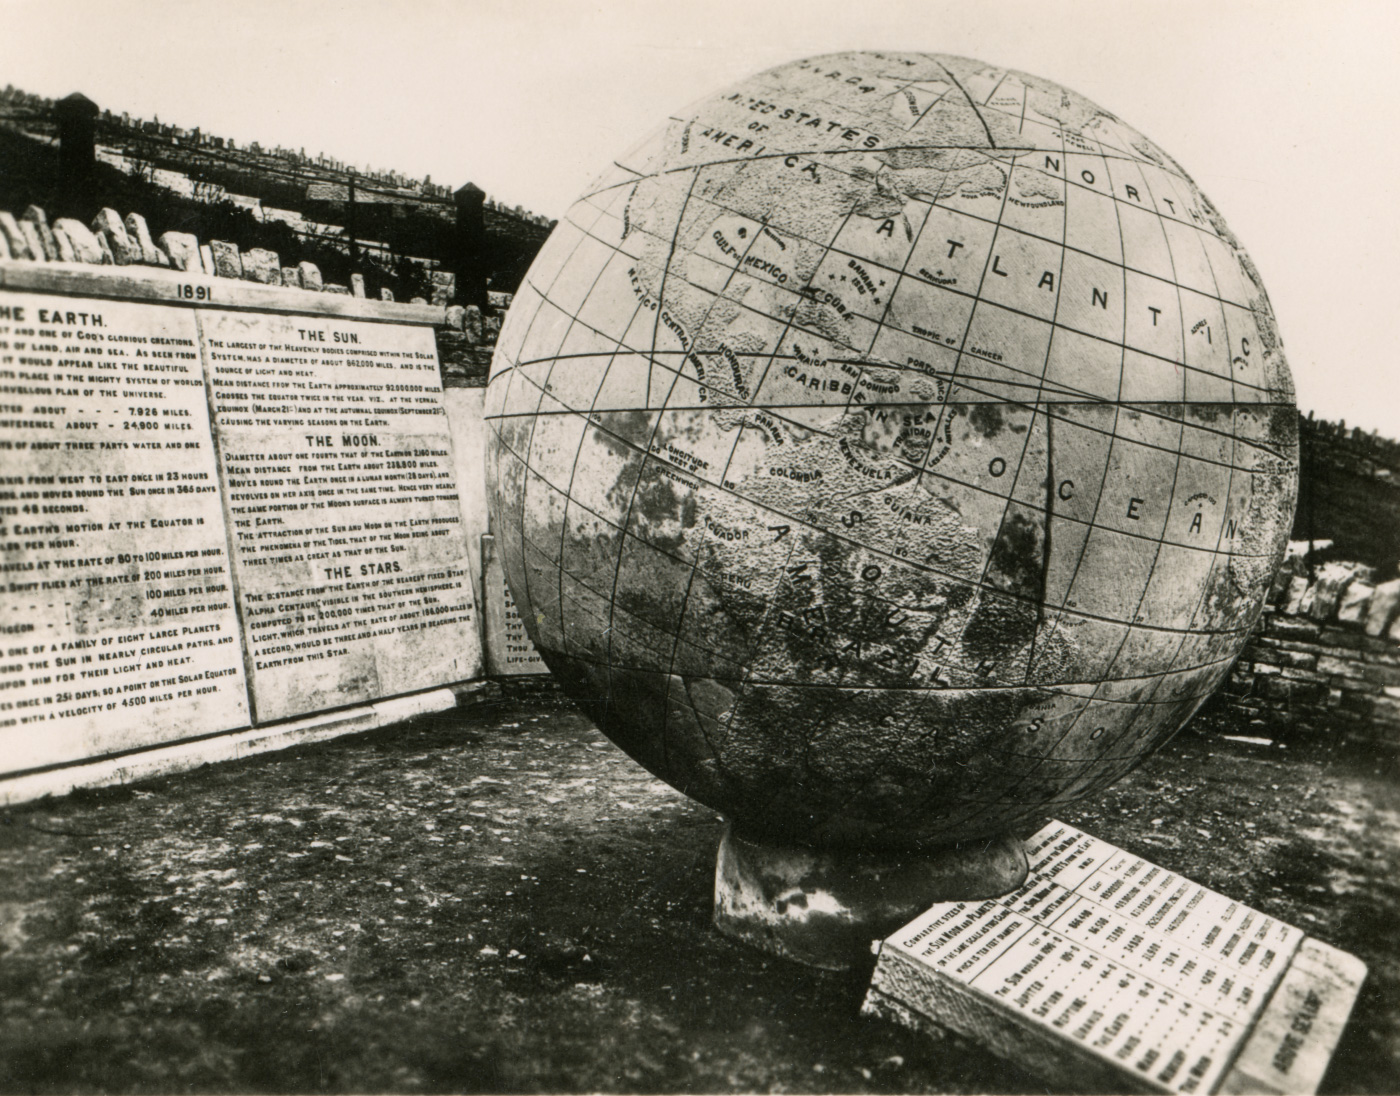 The Globe at Durlston